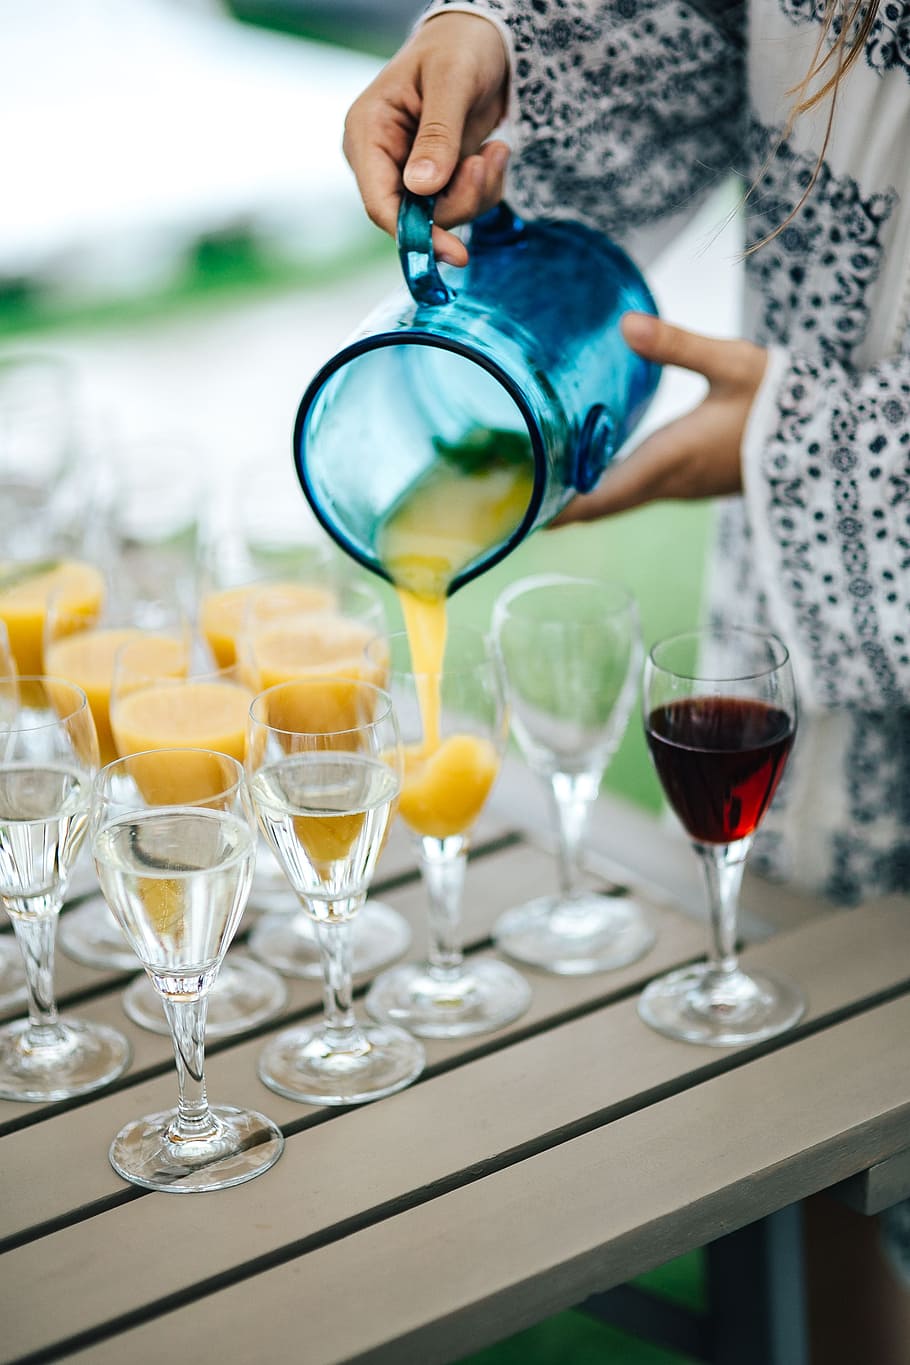 gelas, jeruk, jus, anggur, air, musim panas, minuman, pesta, alkohol, makanan dan minuman